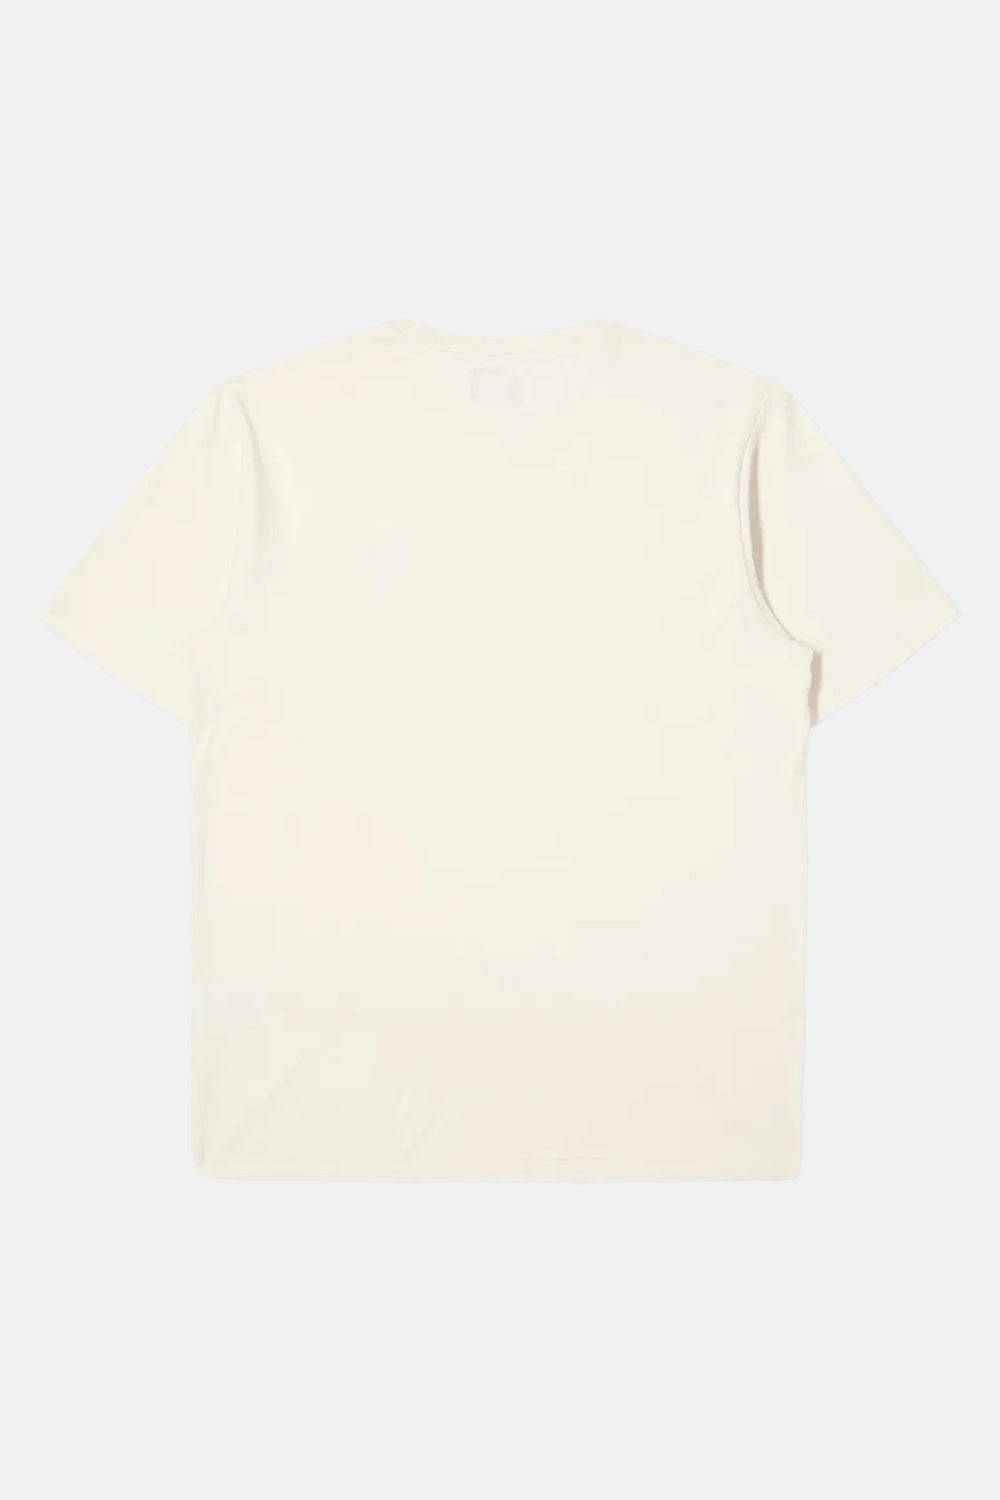 Edwin Japanese Sun T-Shirt (Whisper White)